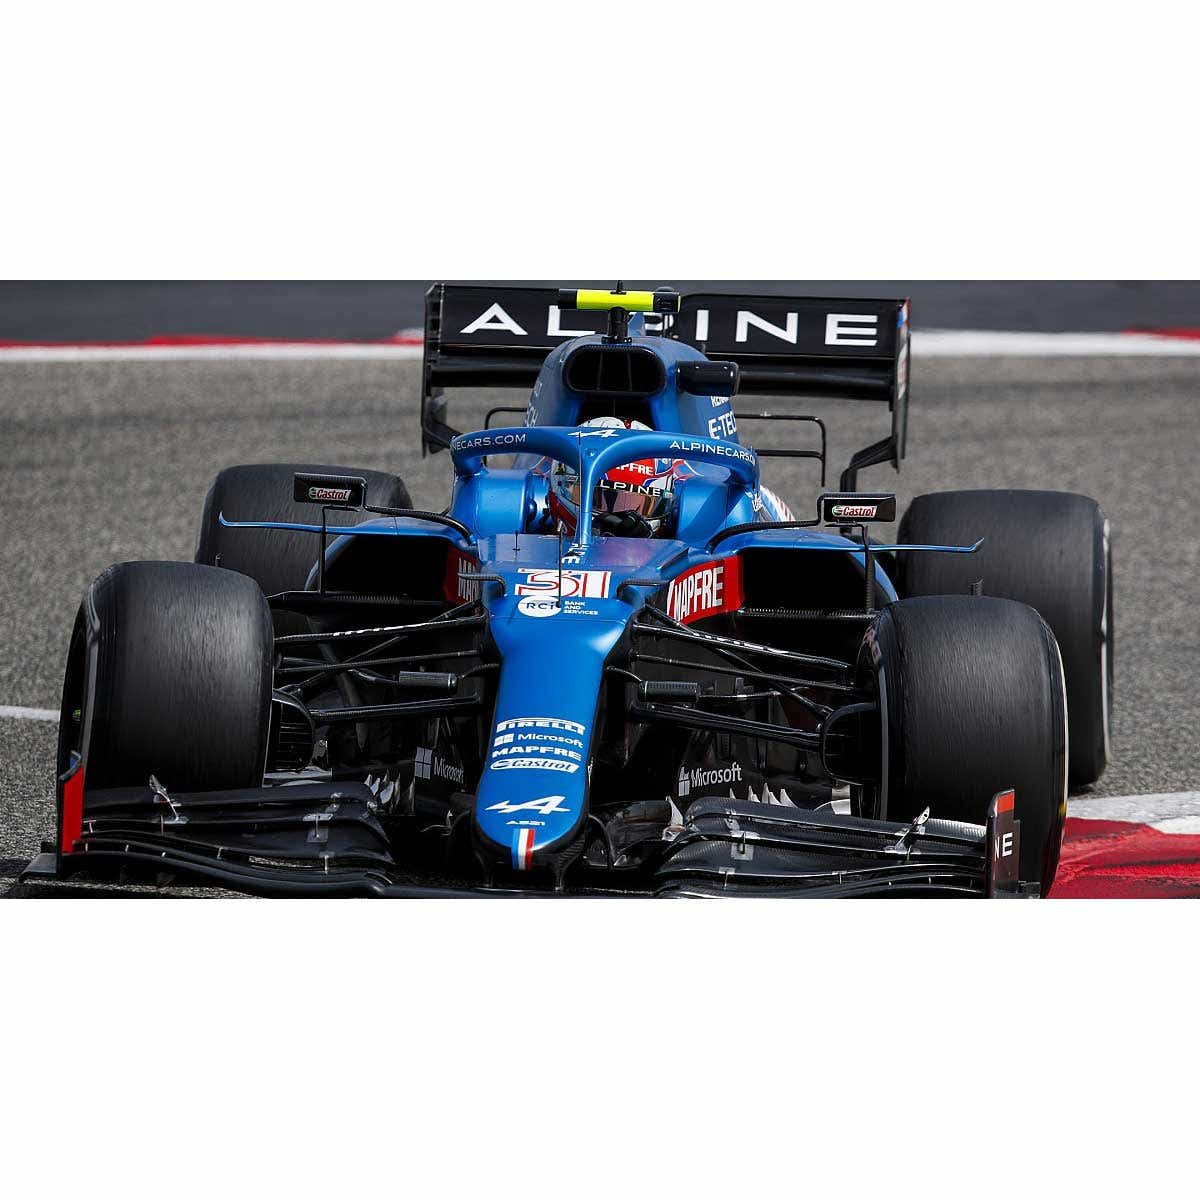 Alpine A521 No.14 Alpine F1 Team - 3rd Qatar GP 2021  - Fernando Alonso.  With No.3 Board and Pit Board - 1:43 Scale Resin Model Car